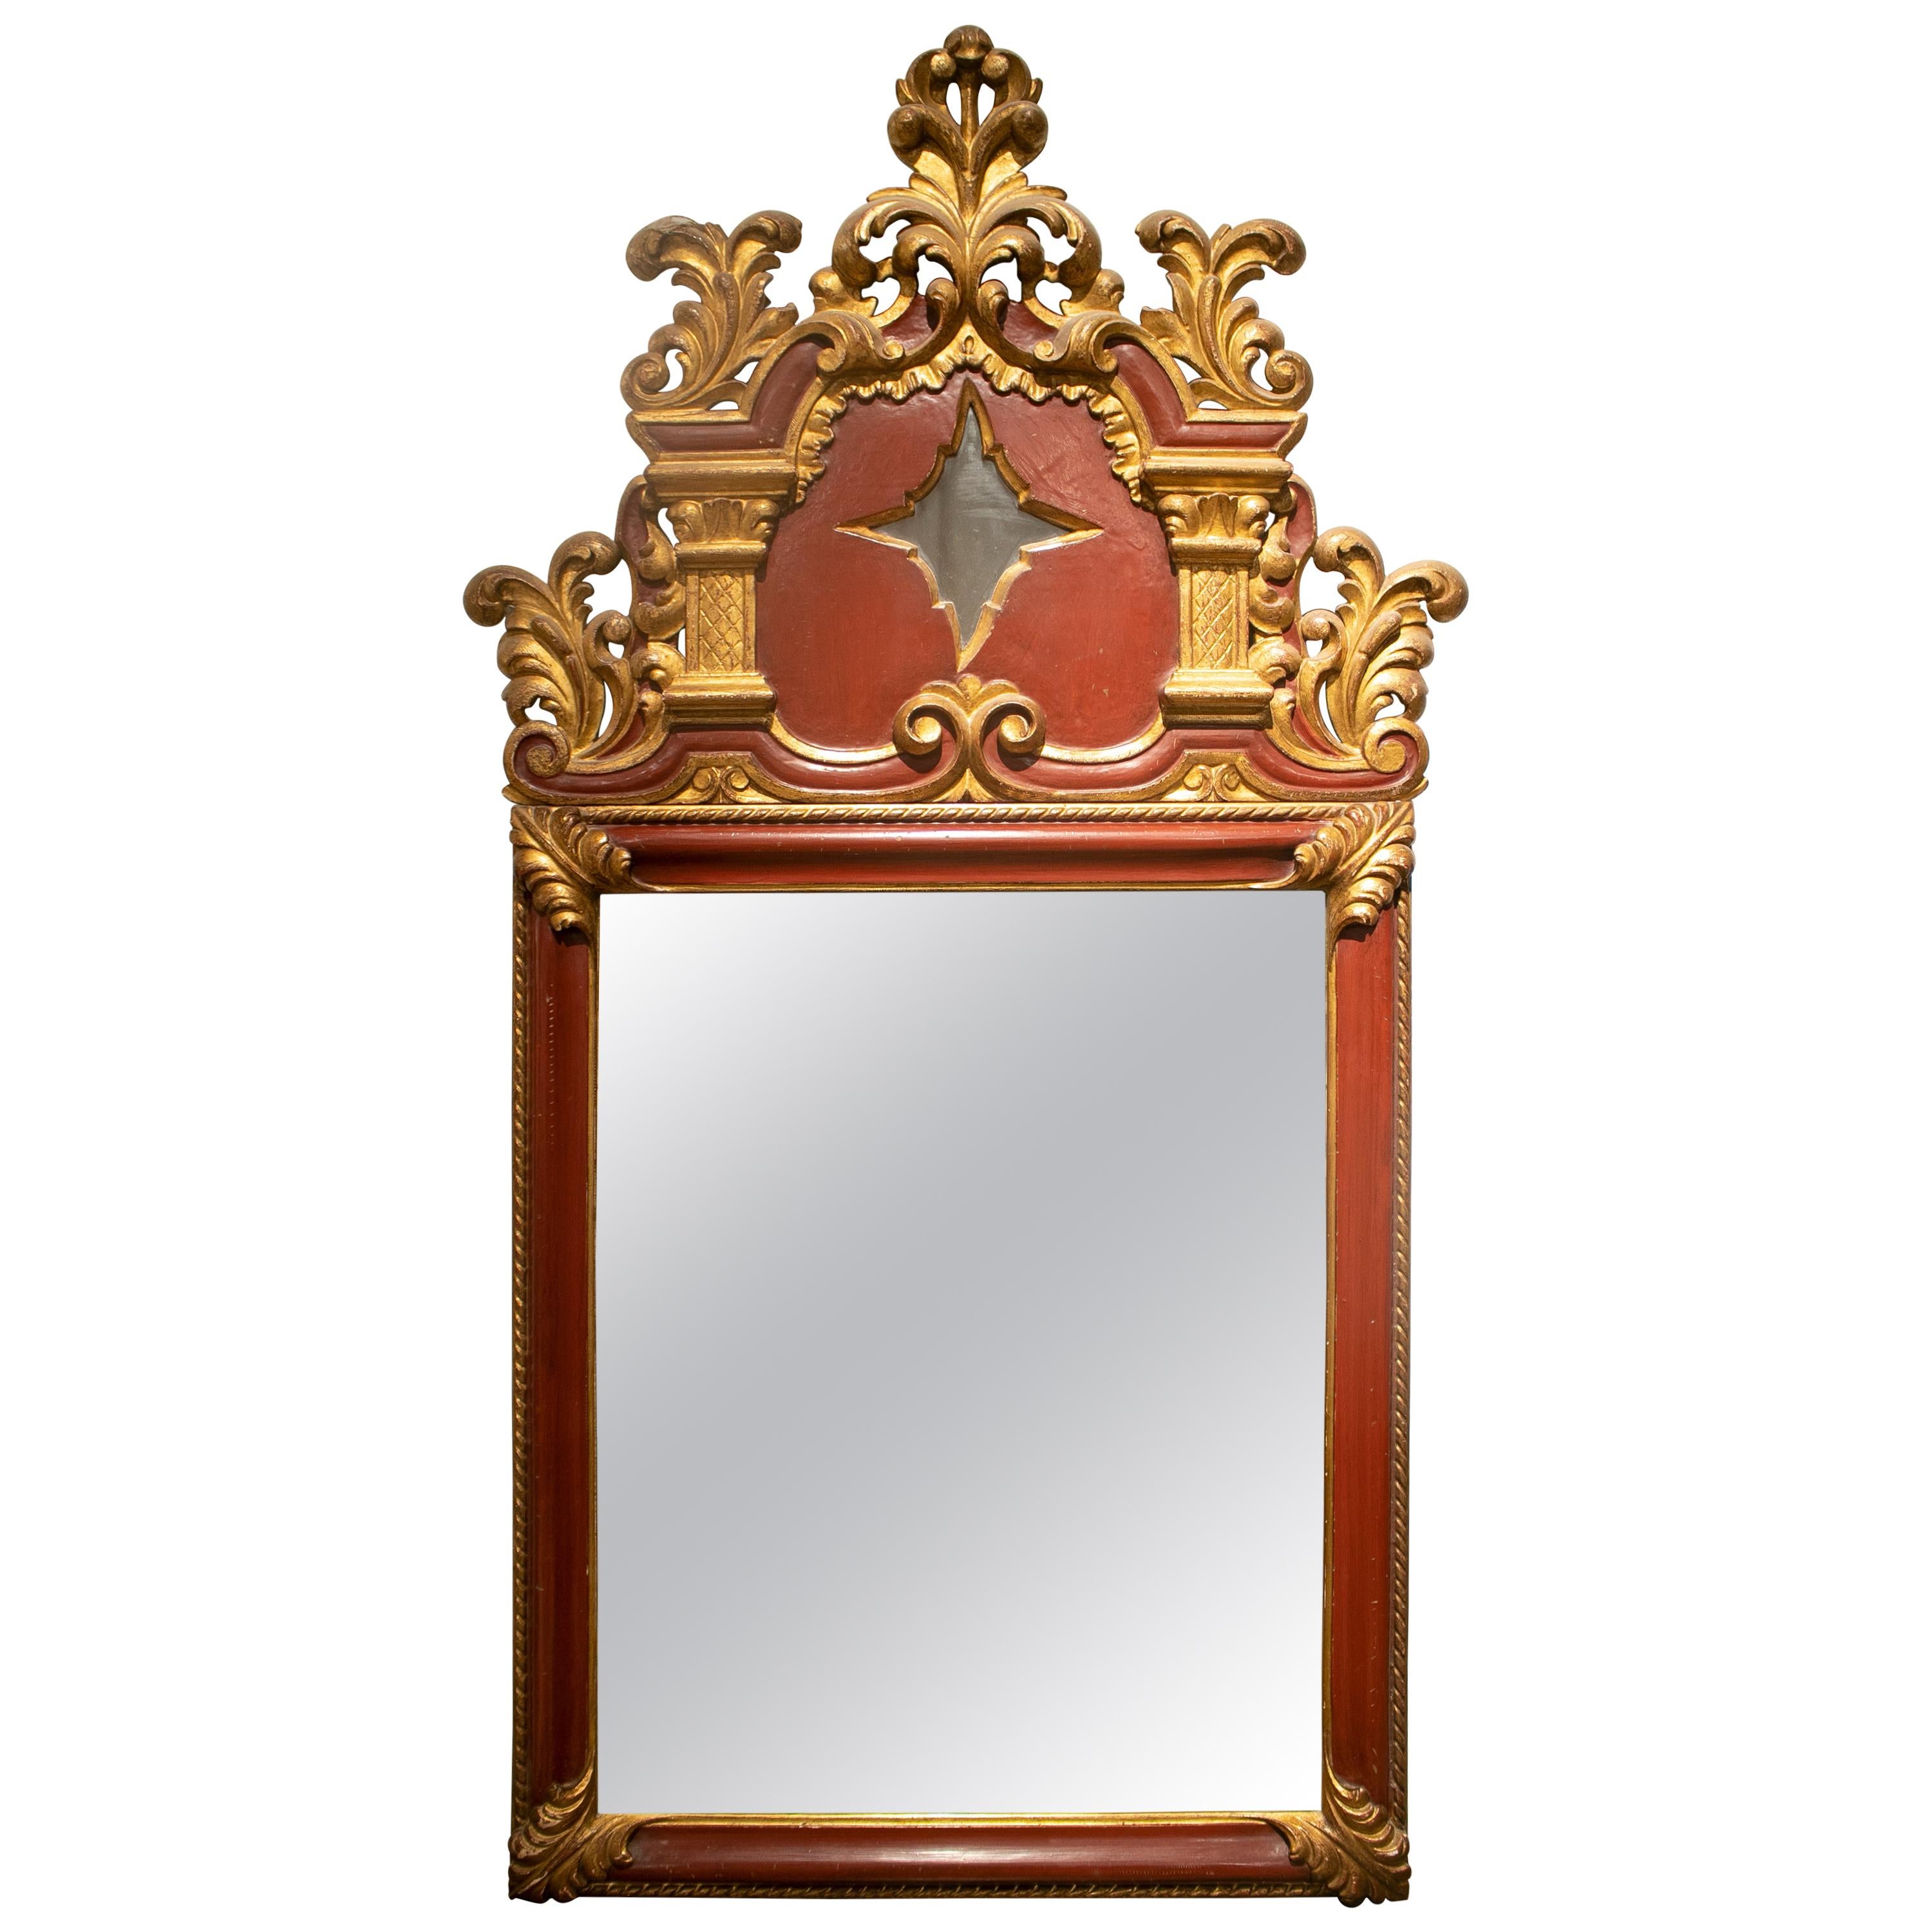 1980s Spanish Wooden Painted Mirror w/ Crest